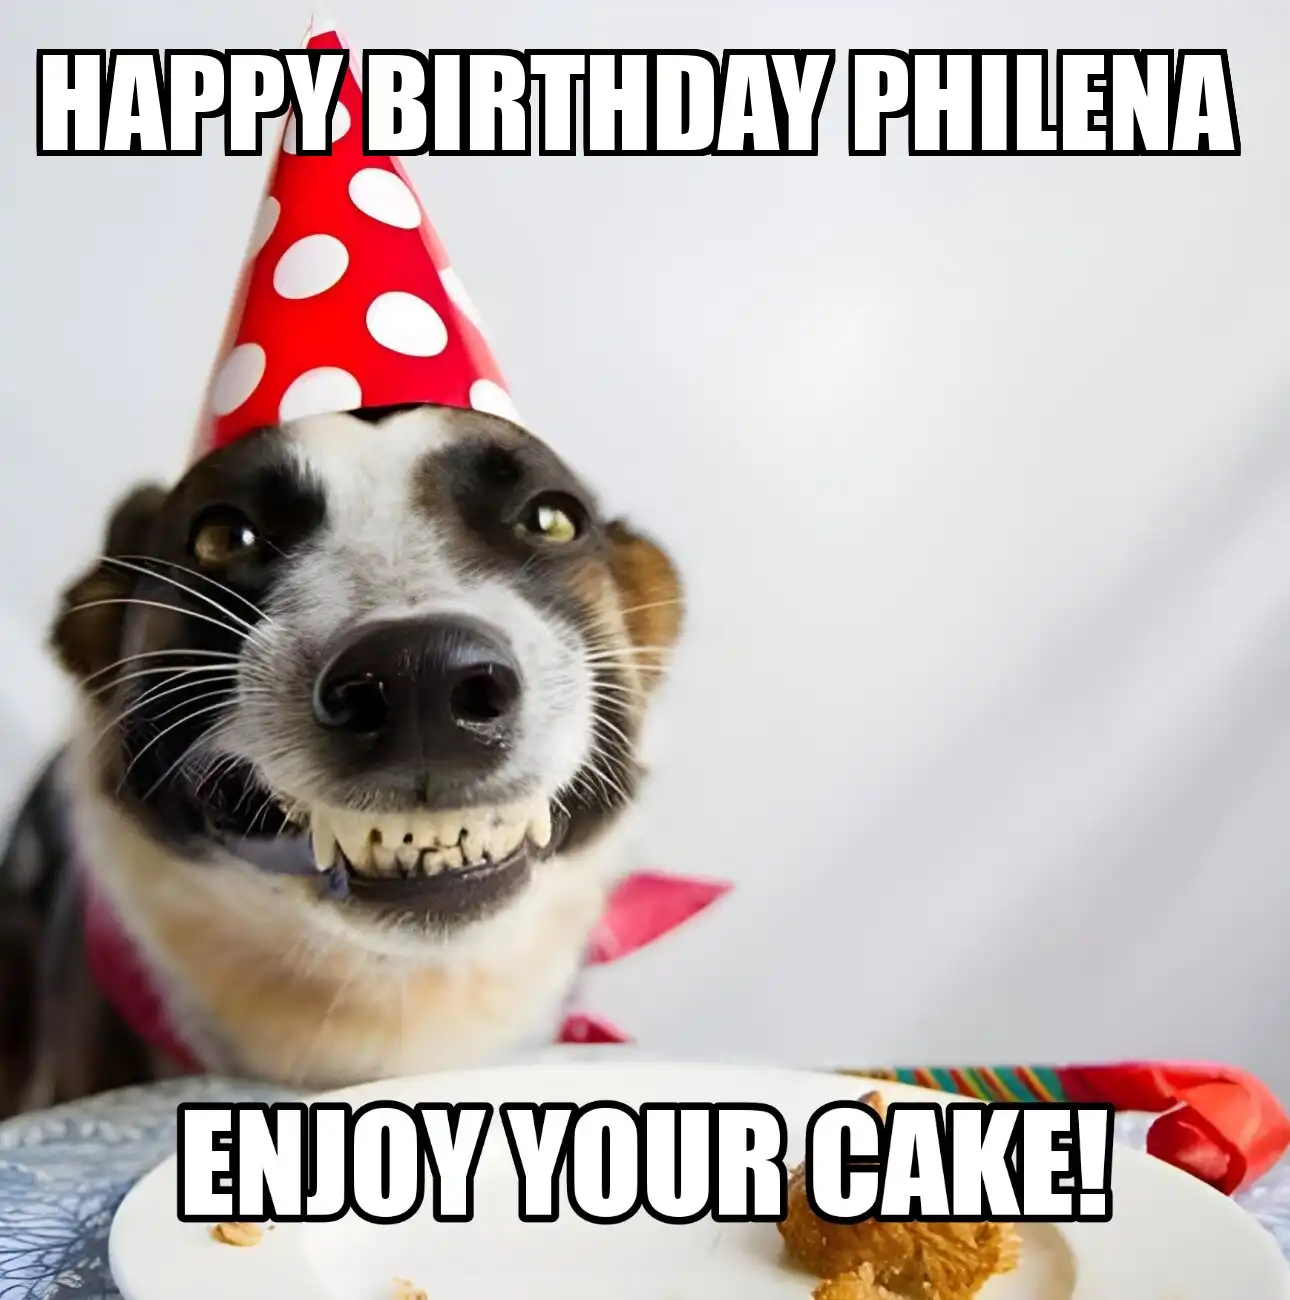 Happy Birthday Philena Enjoy Your Cake Dog Meme